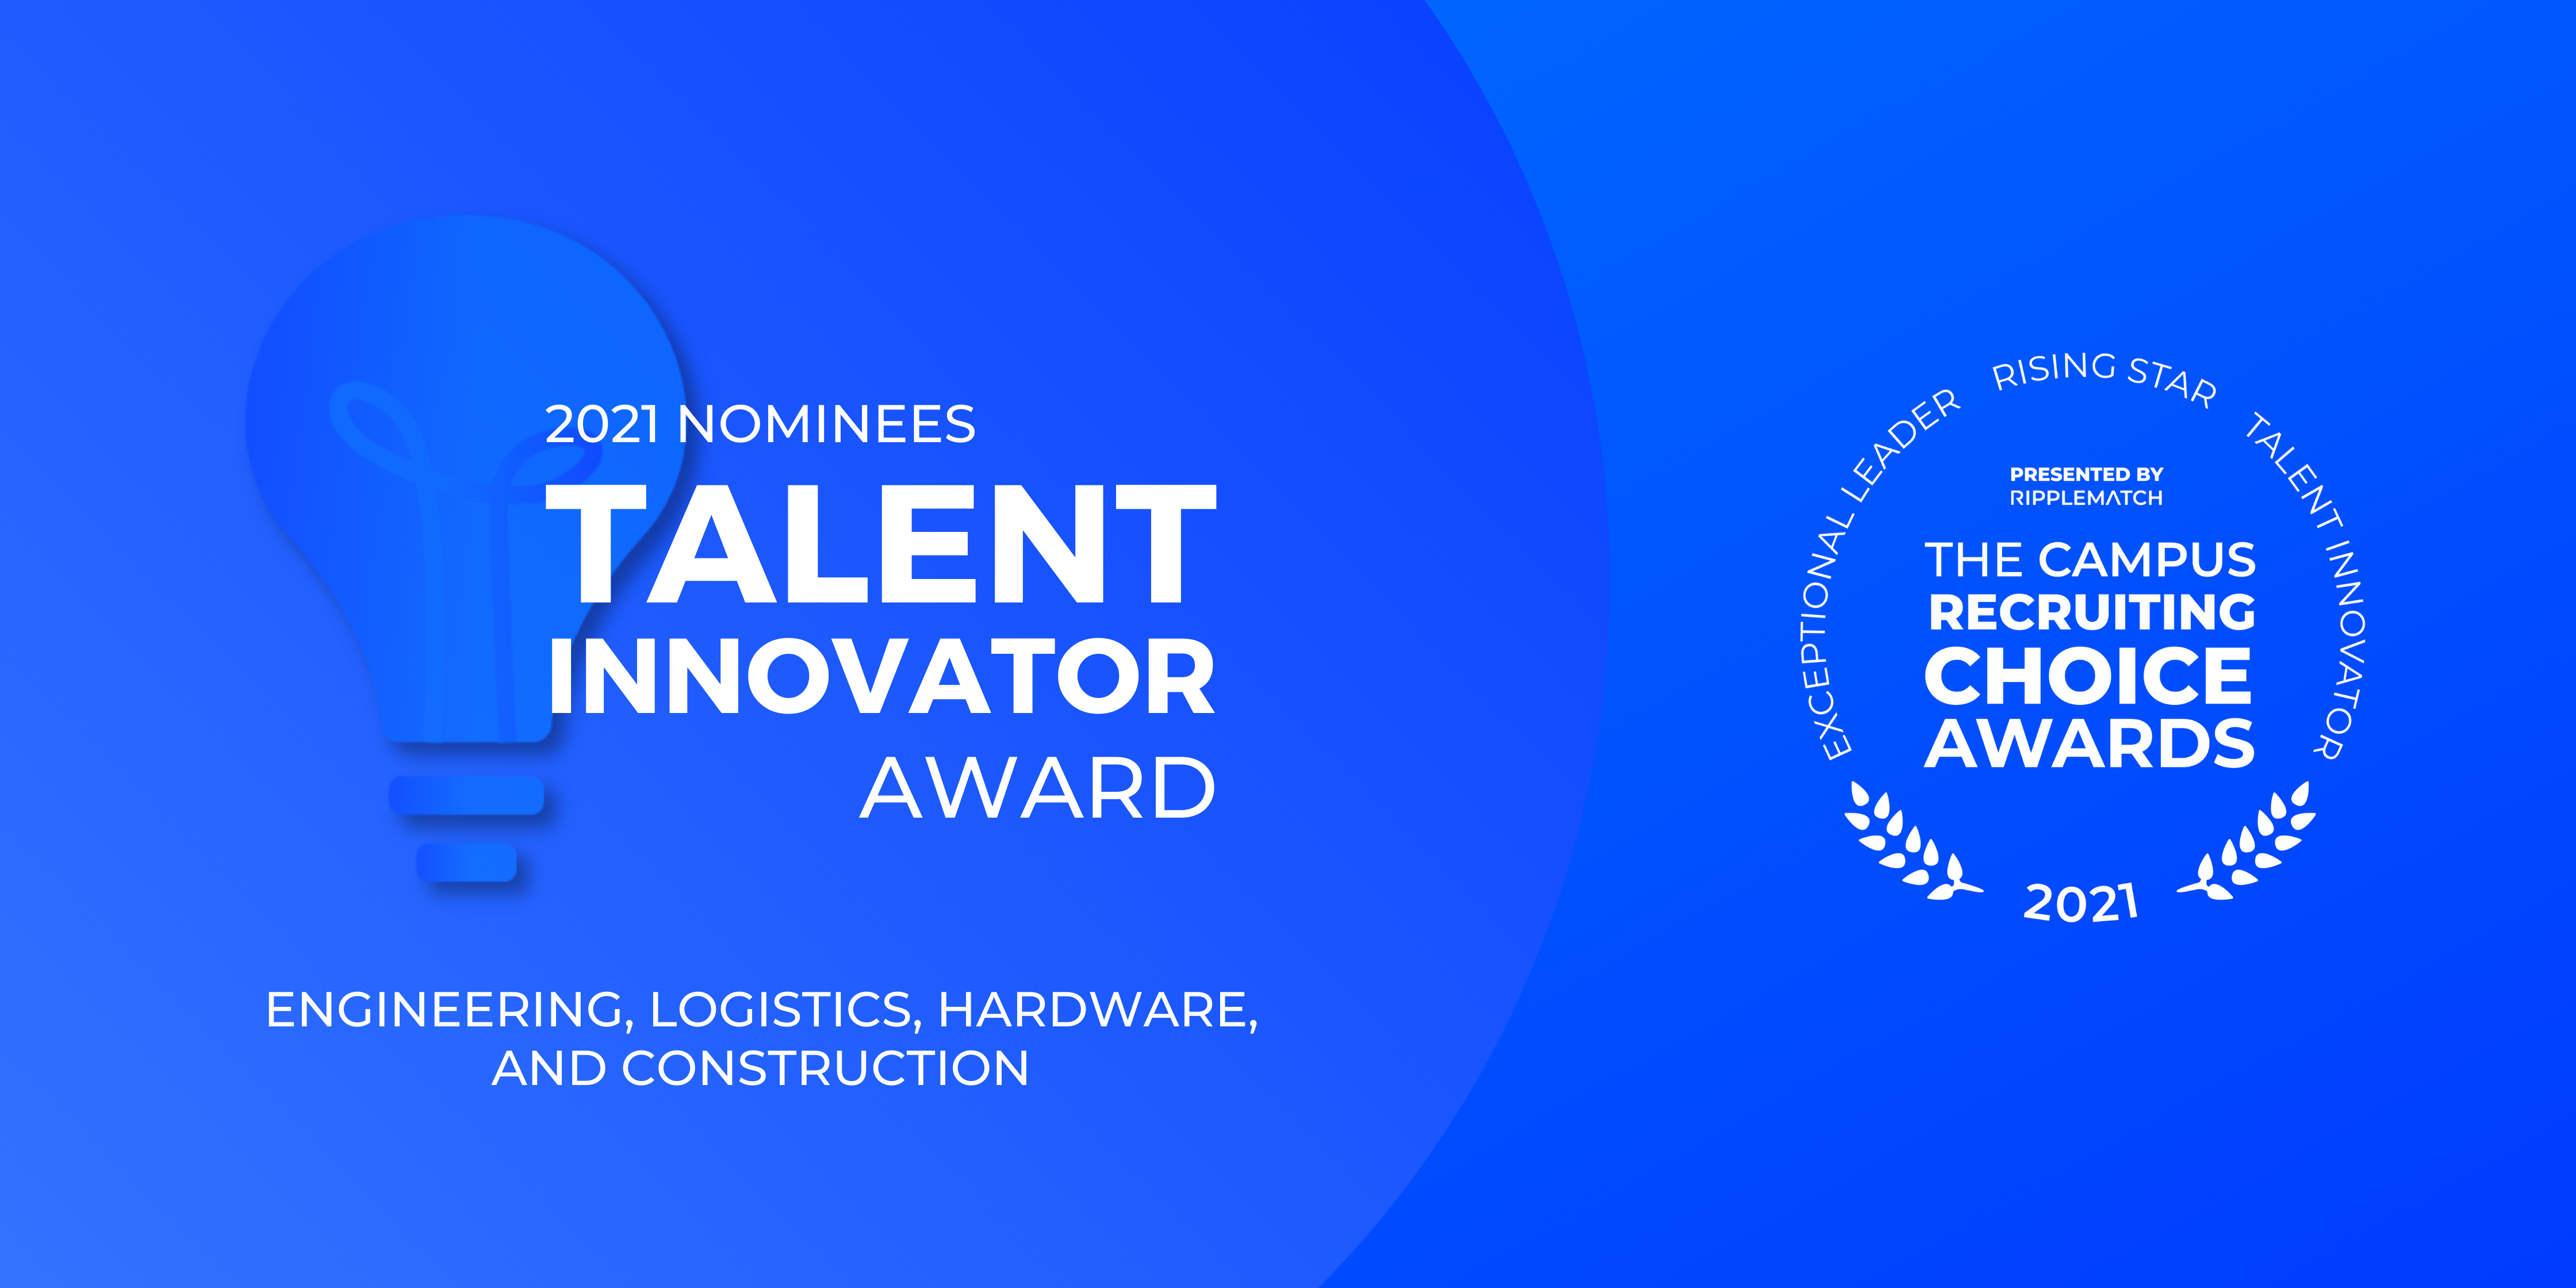 Talent Innovator Award - Engineering, Logistics, Hardware, and Construction